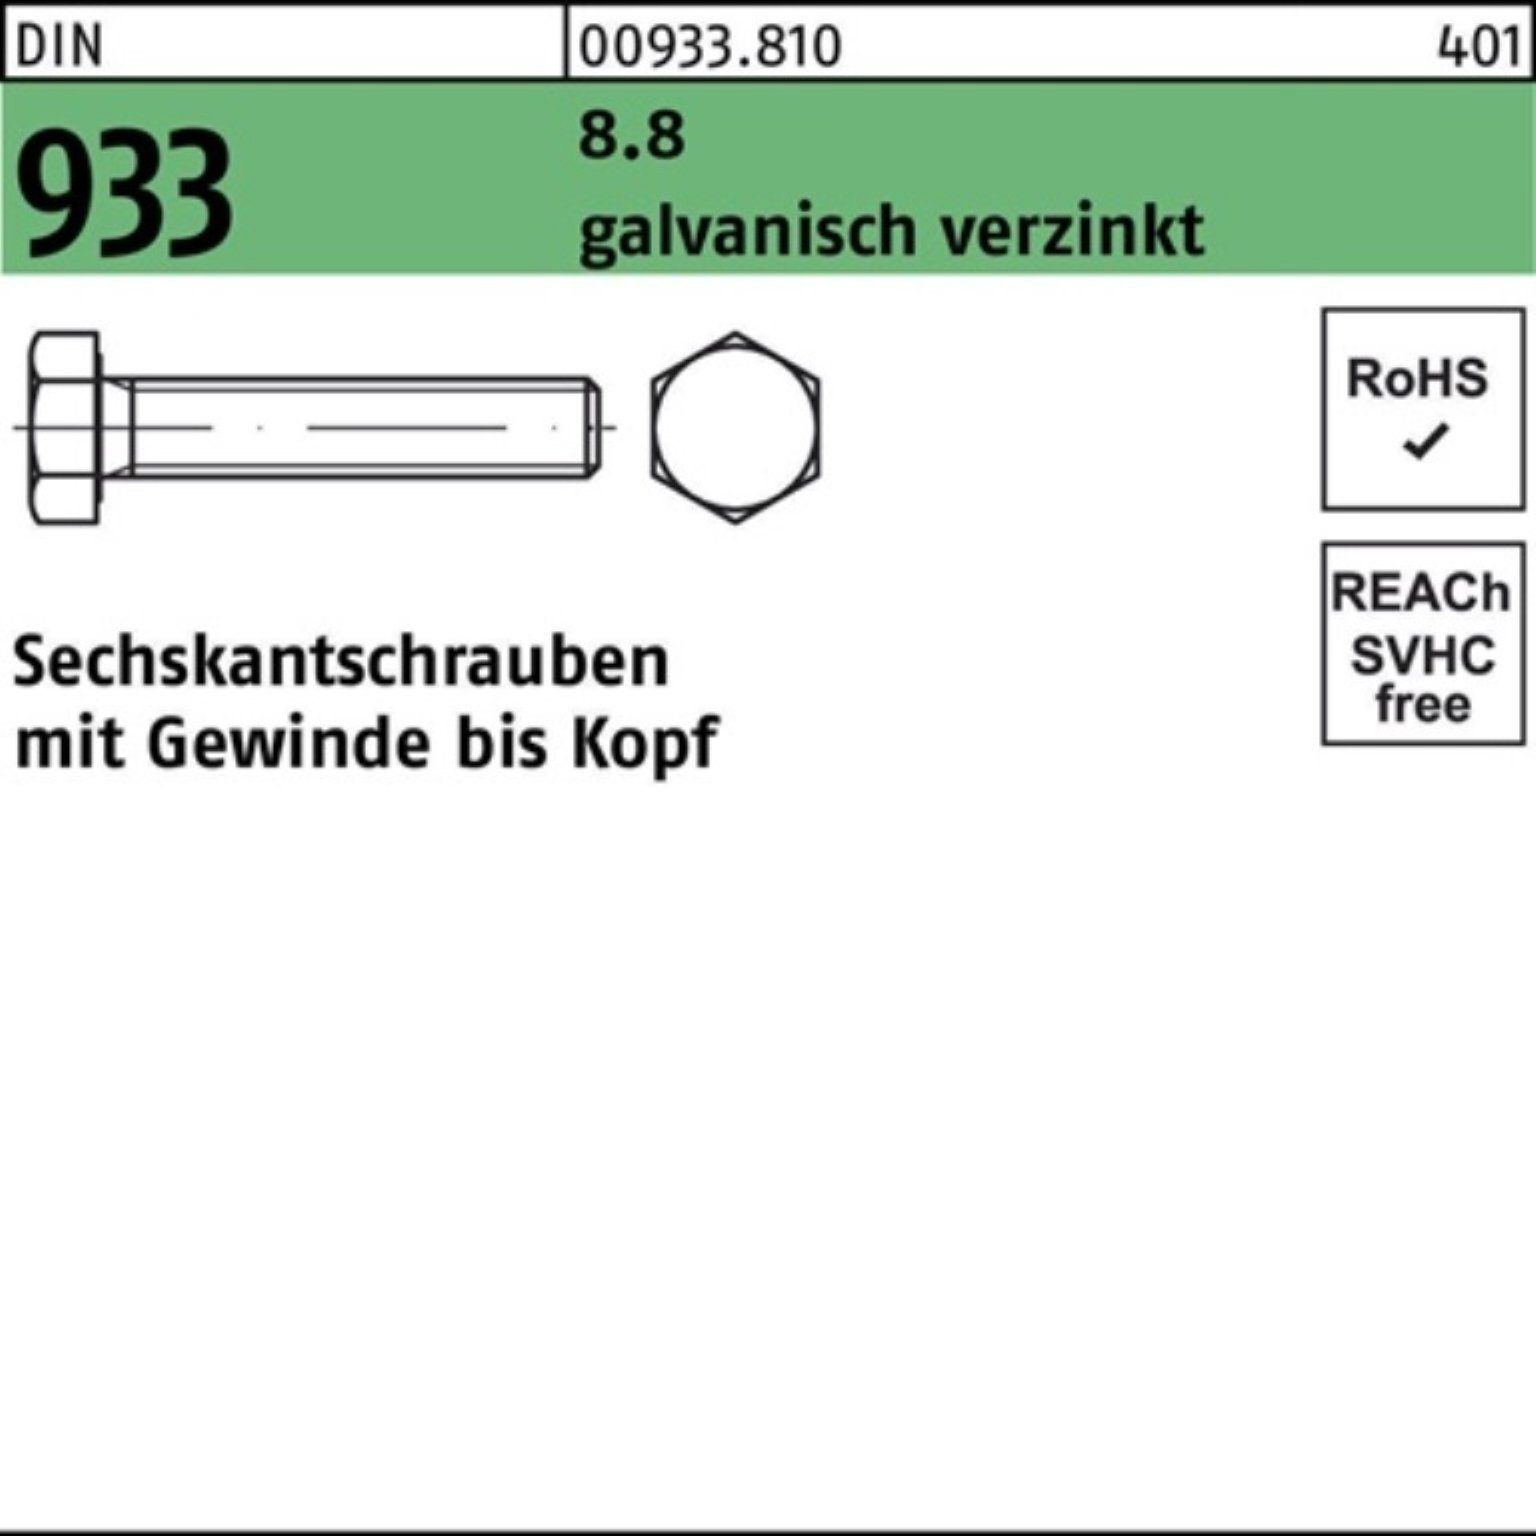 Sechskantschraube Sechskantschraube 100er Stü Pack 1 933 galv.verz. VG 200 8.8 DIN Reyher M48x